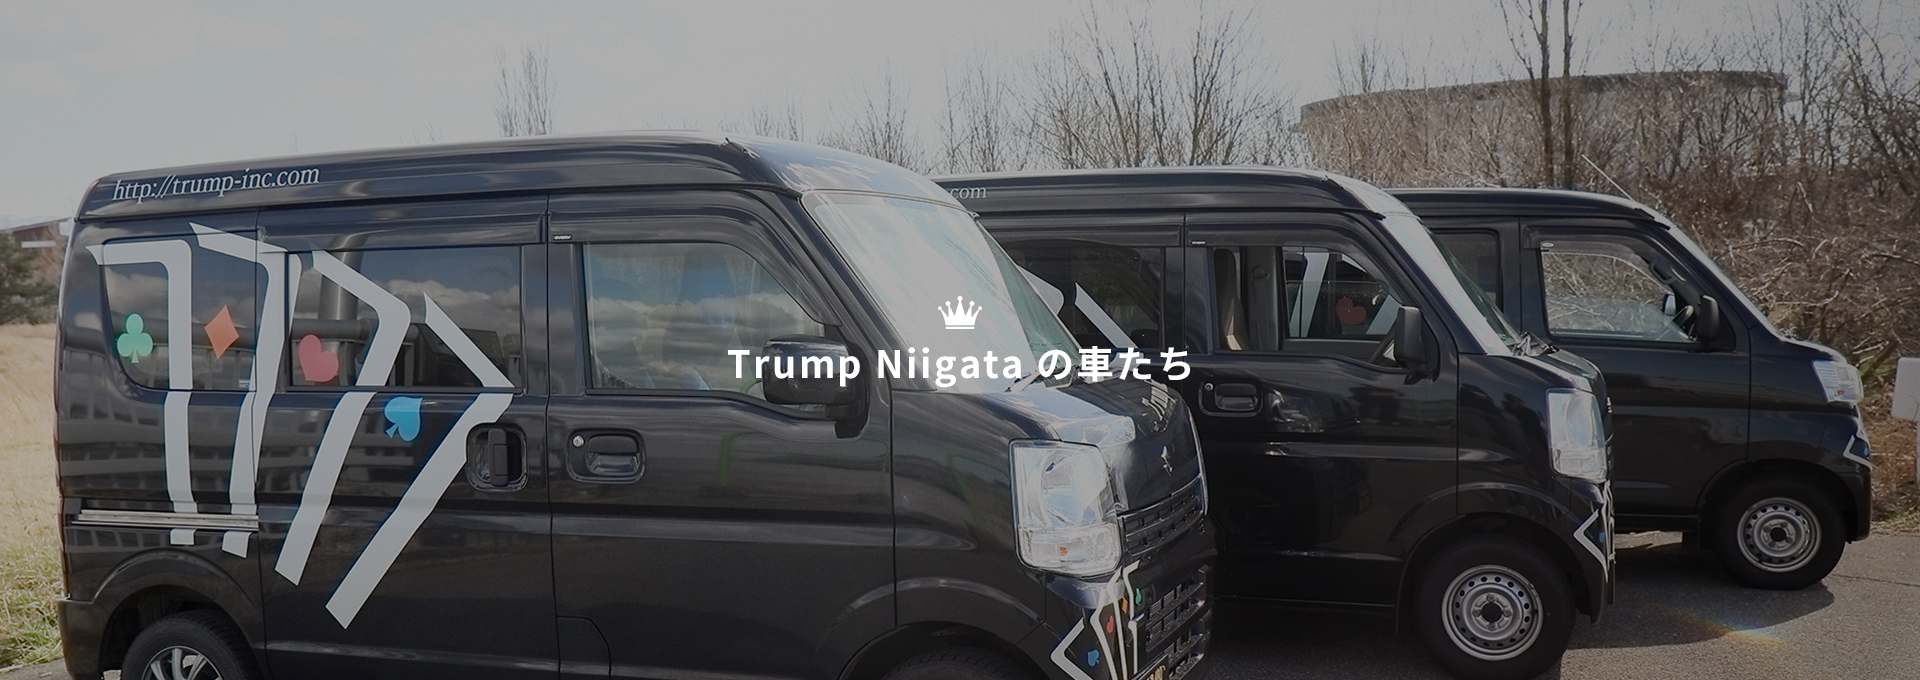 Trump Niigataの車たち